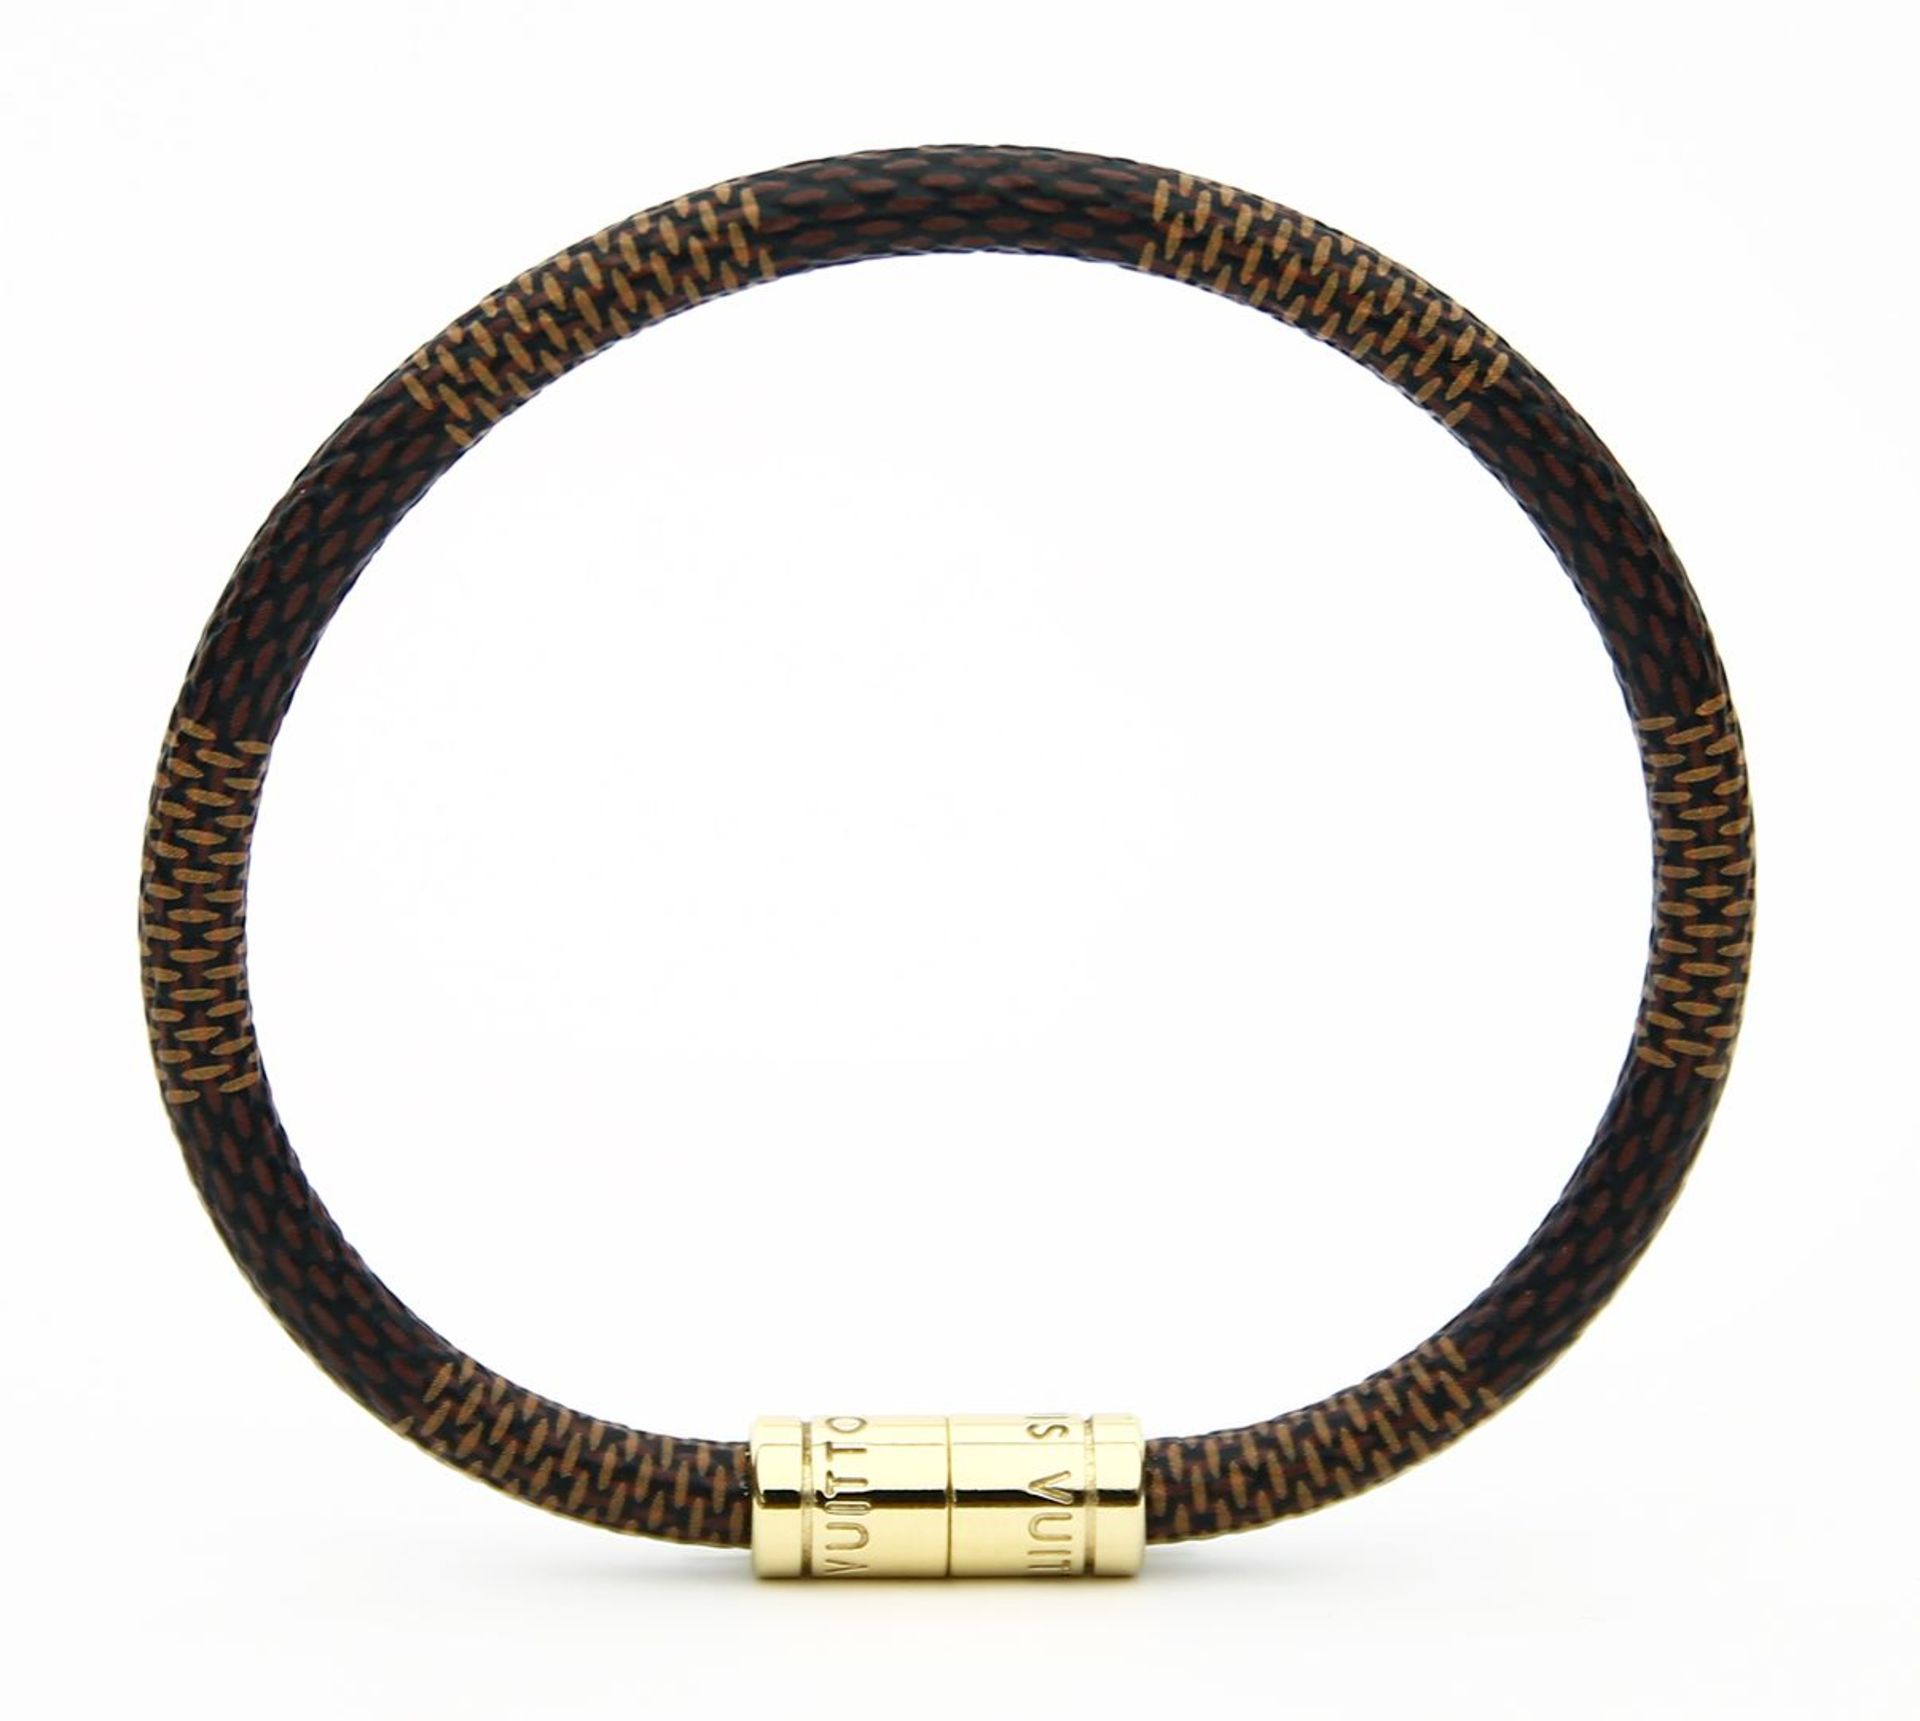 Armband "Keep it", Louis Vuitton. - Image 2 of 3